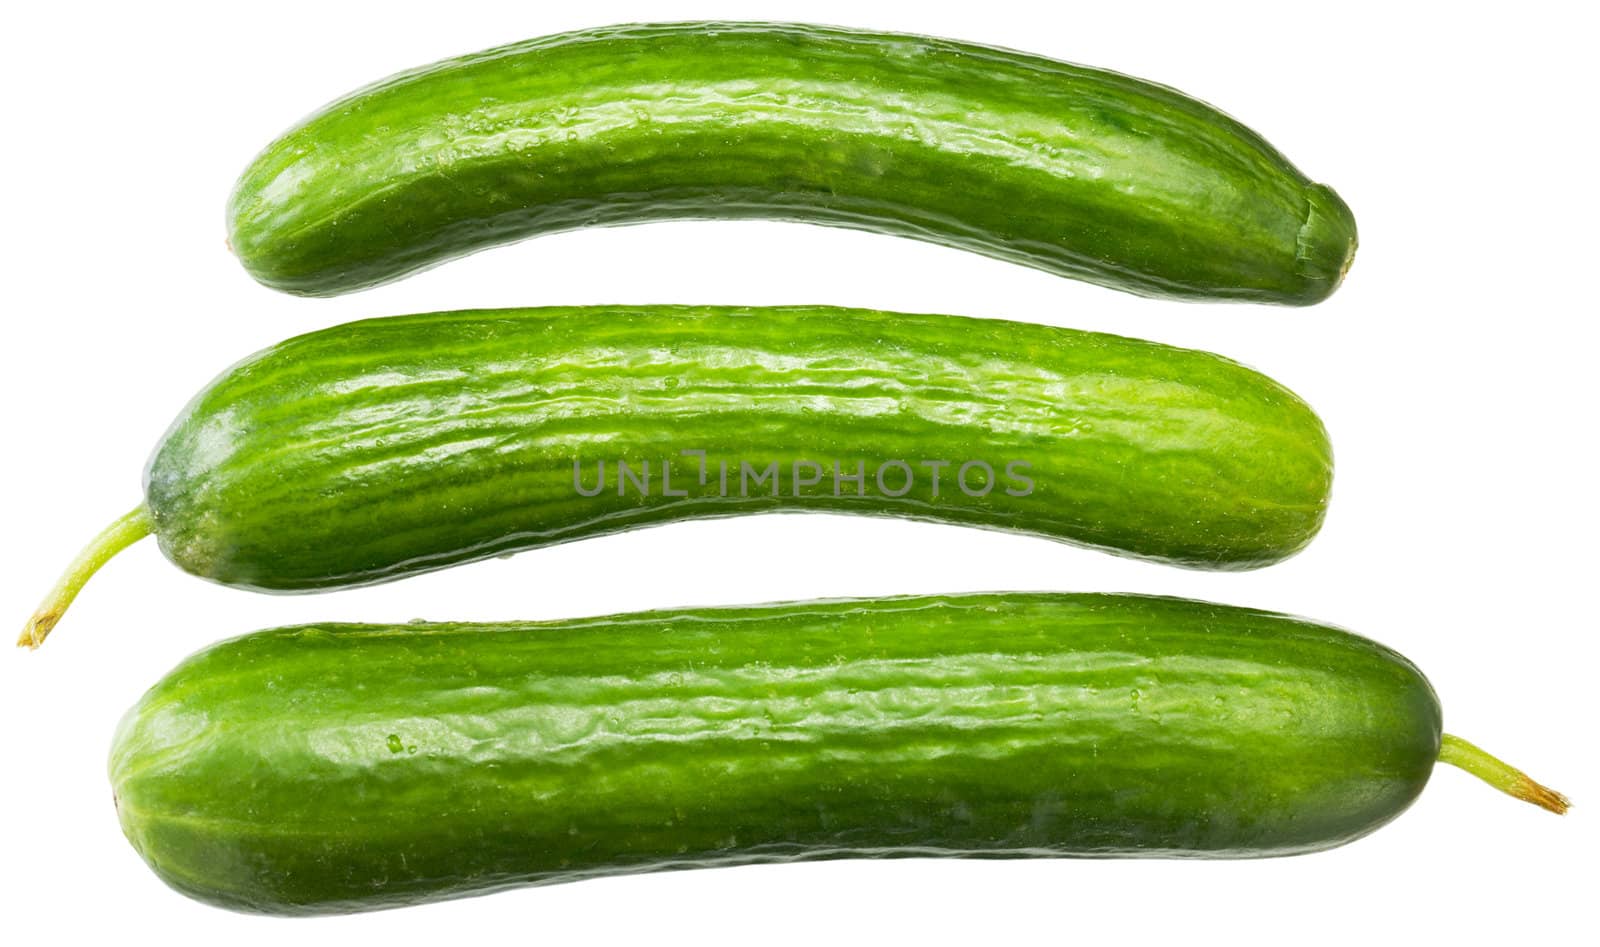 Three cucumbers by pzaxe